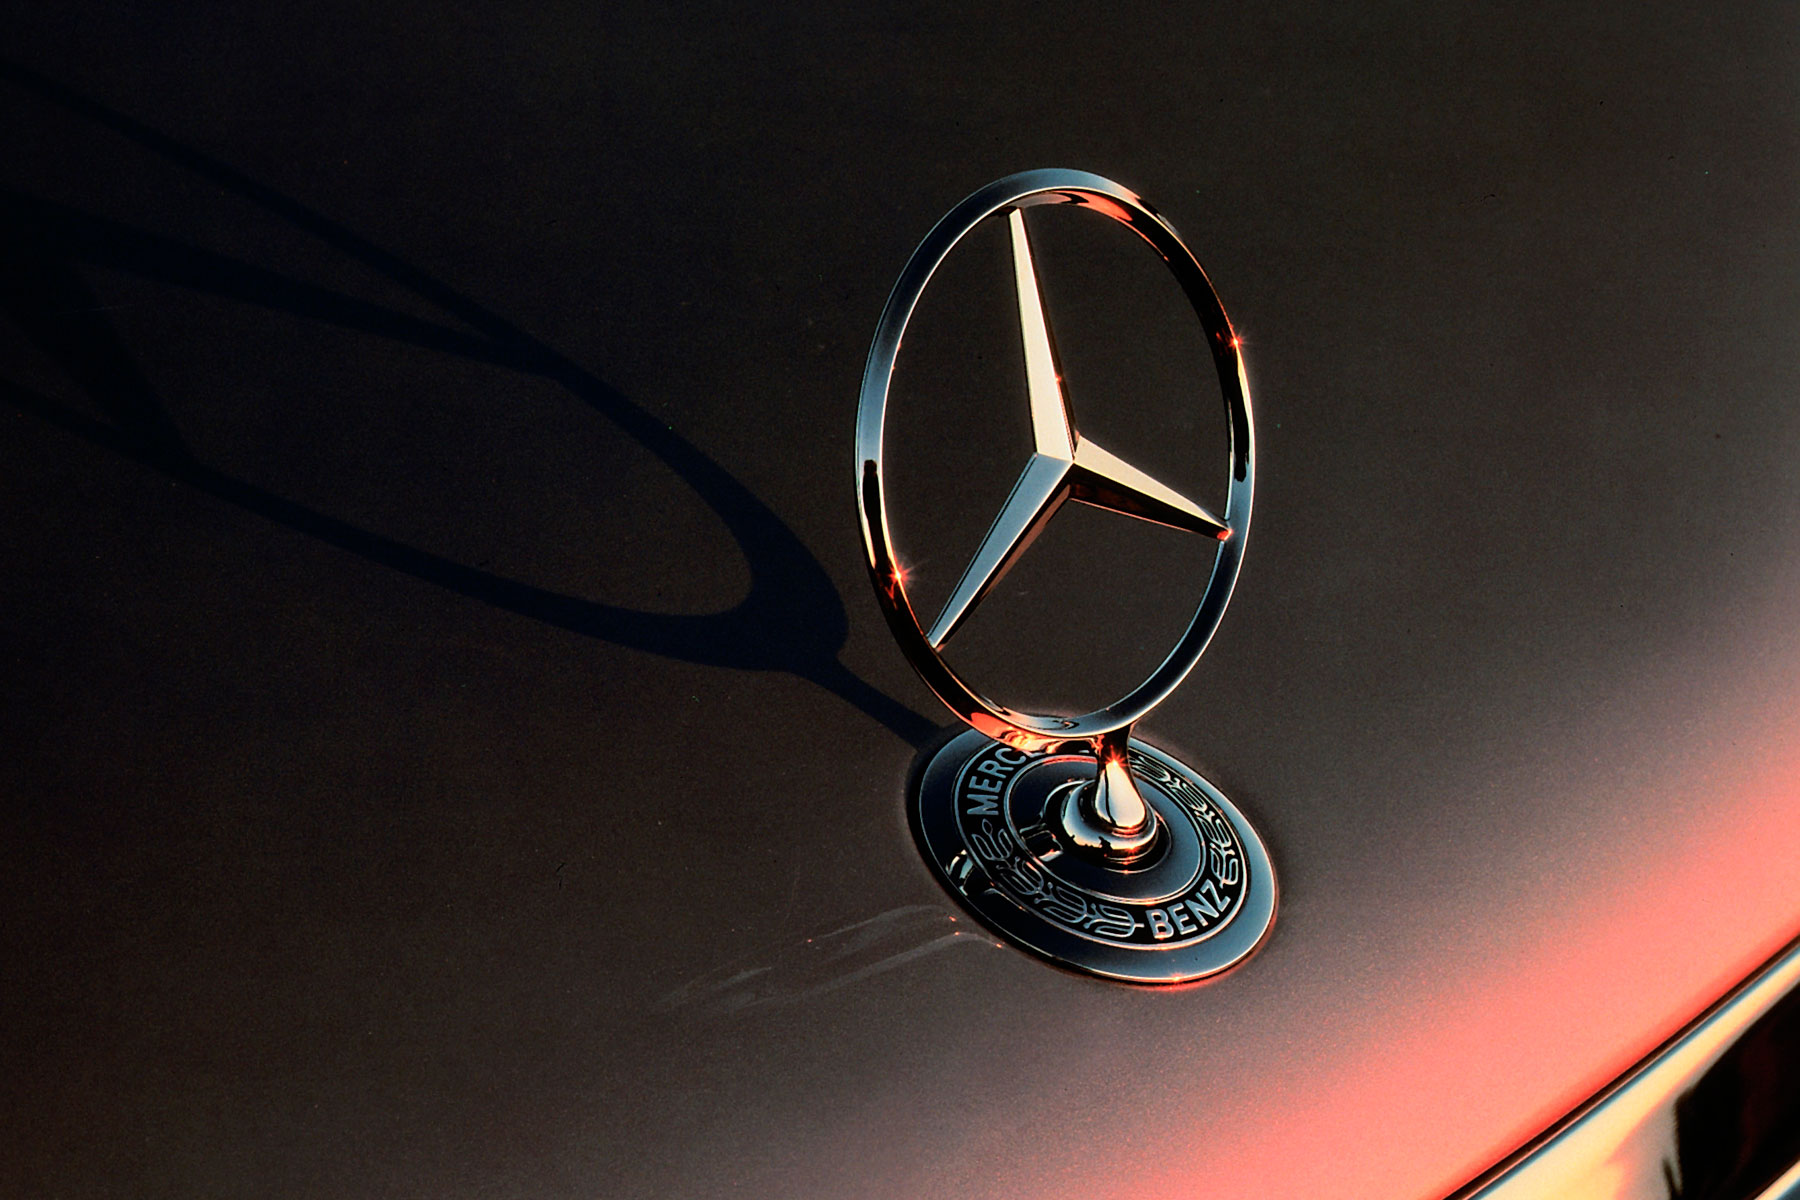 Mercedes-Benz badge